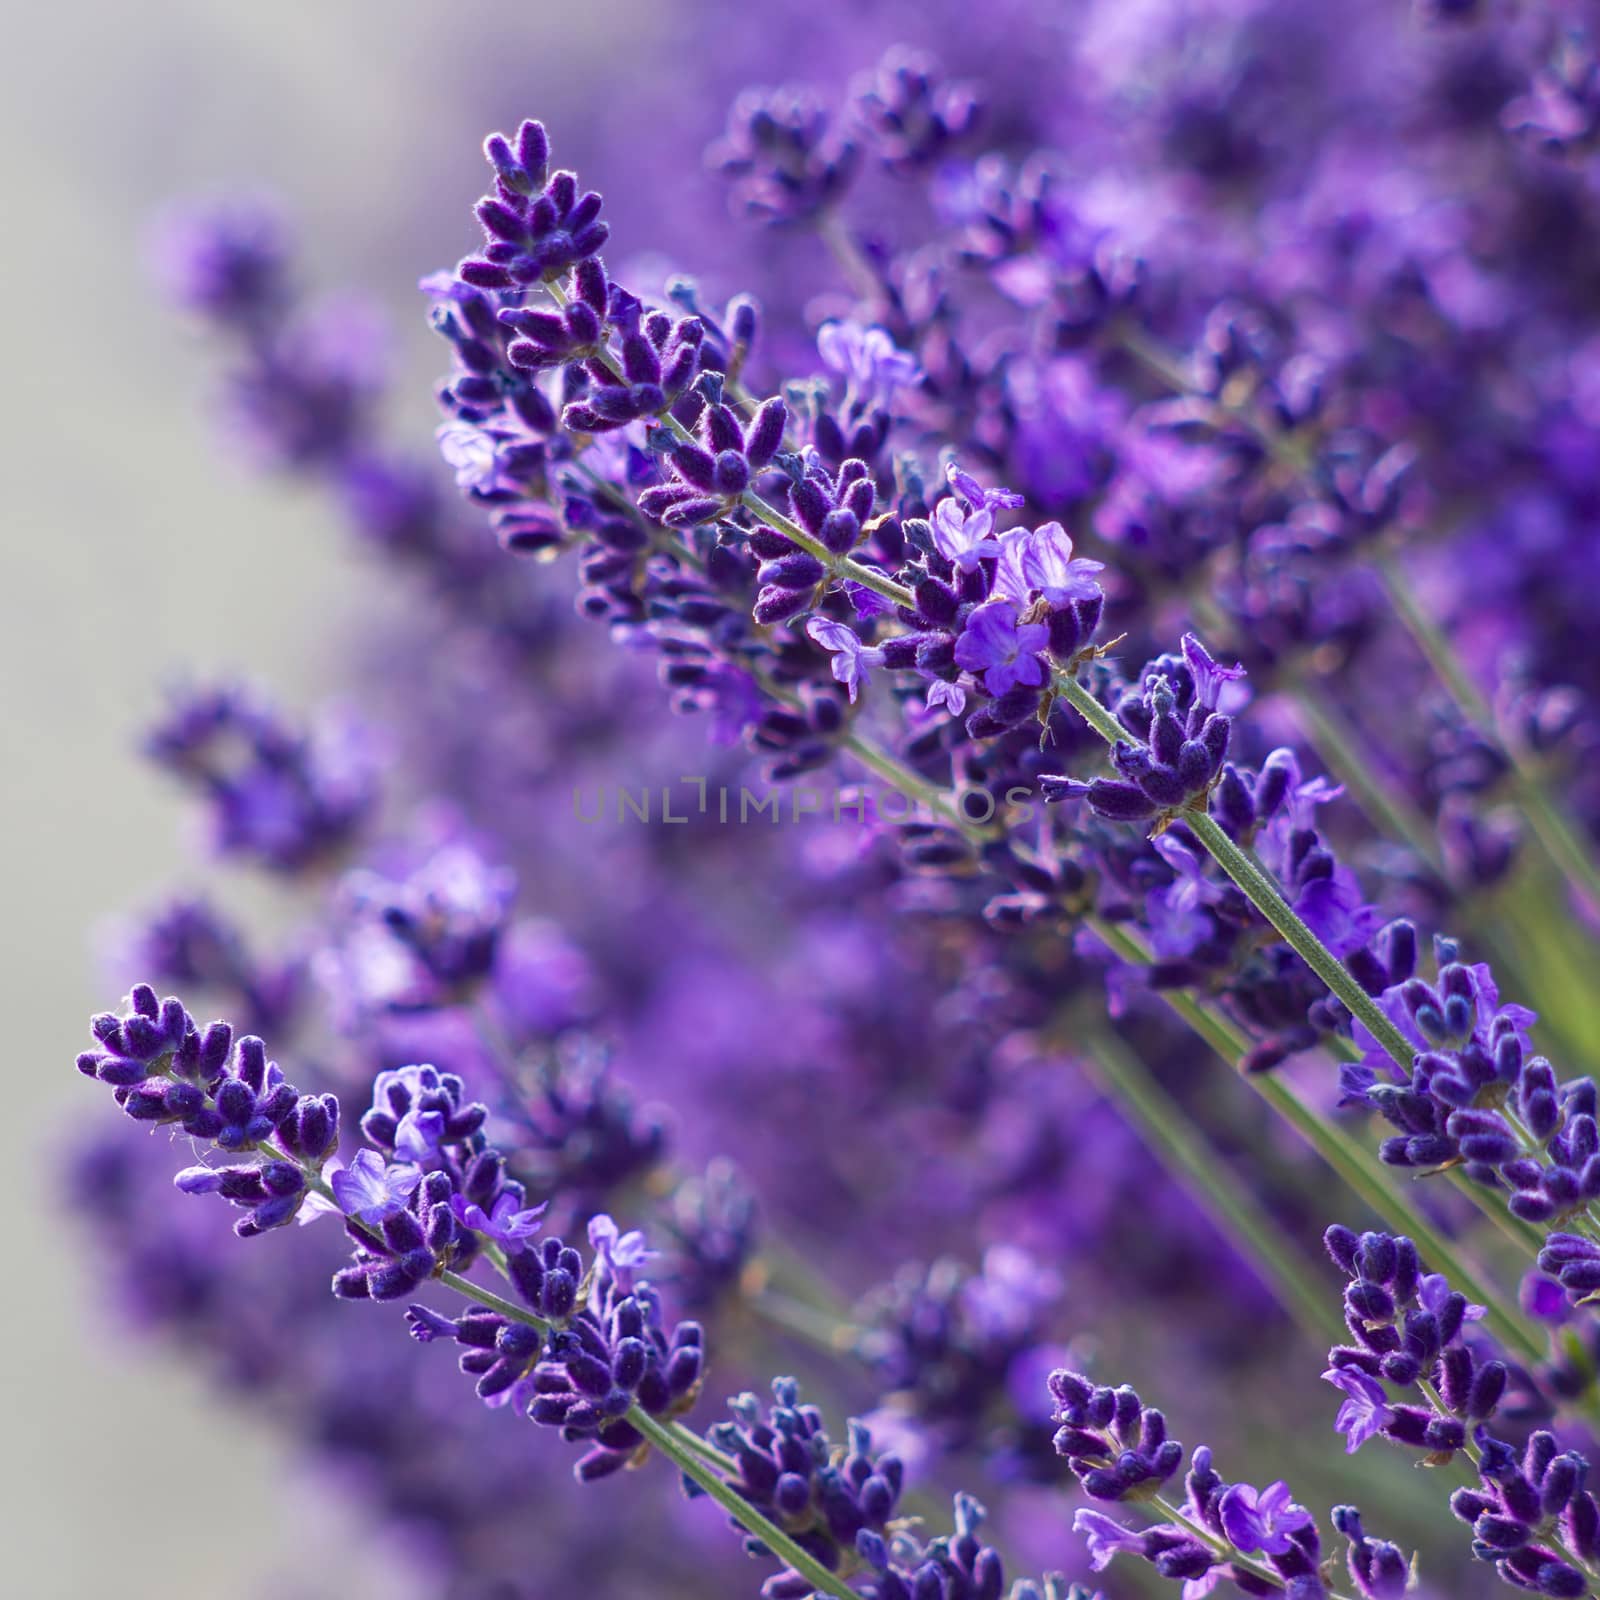 lavender flowers by miradrozdowski